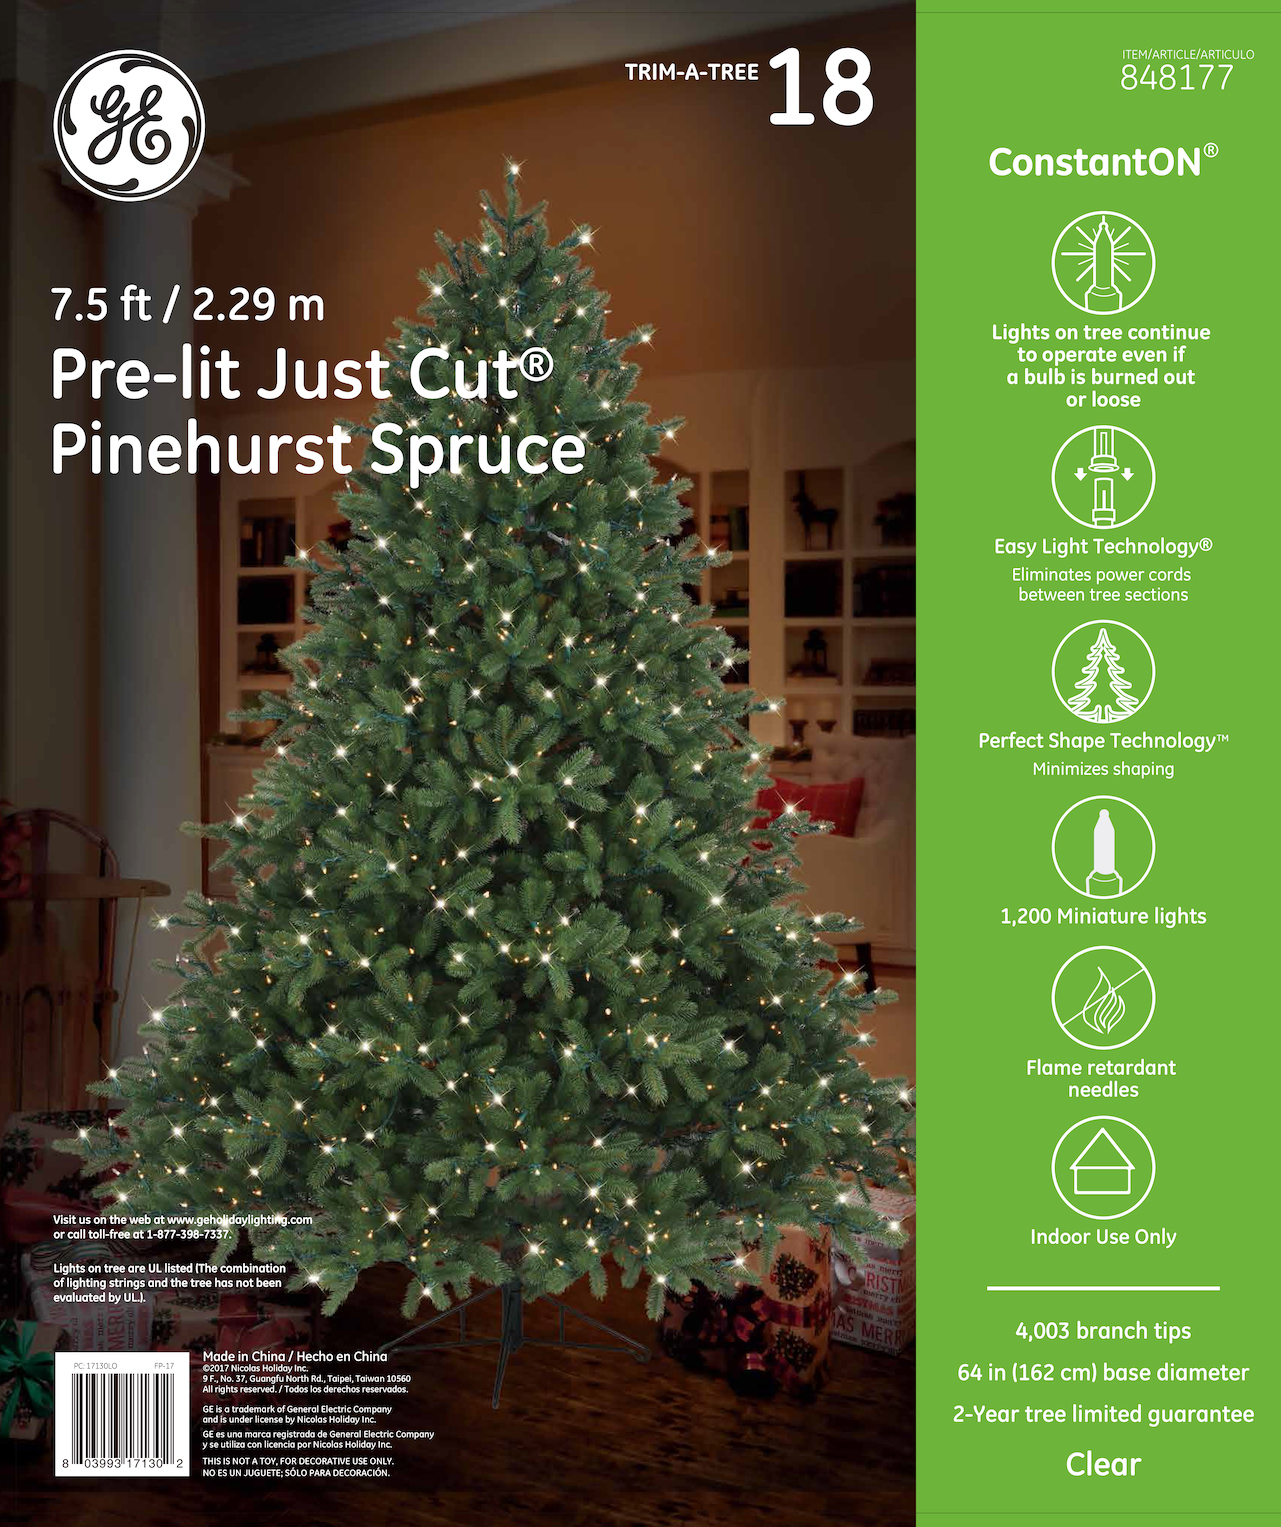 17130 - GE Just Cut® Pinehurst Spruce, 7.5 ft., ConstantON ...